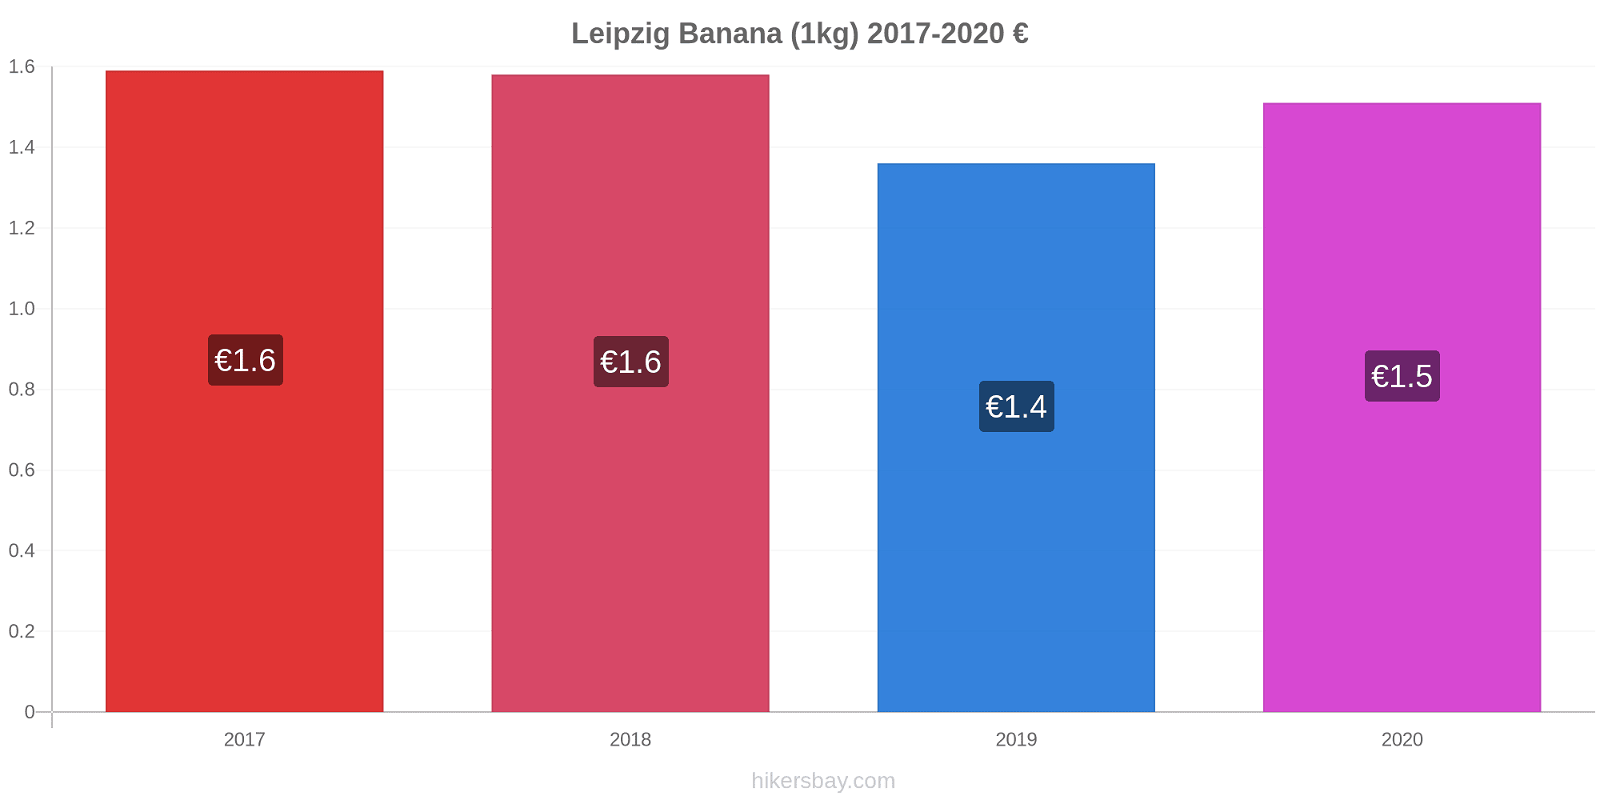 Leipzig modificări de preț Banana (1kg) hikersbay.com